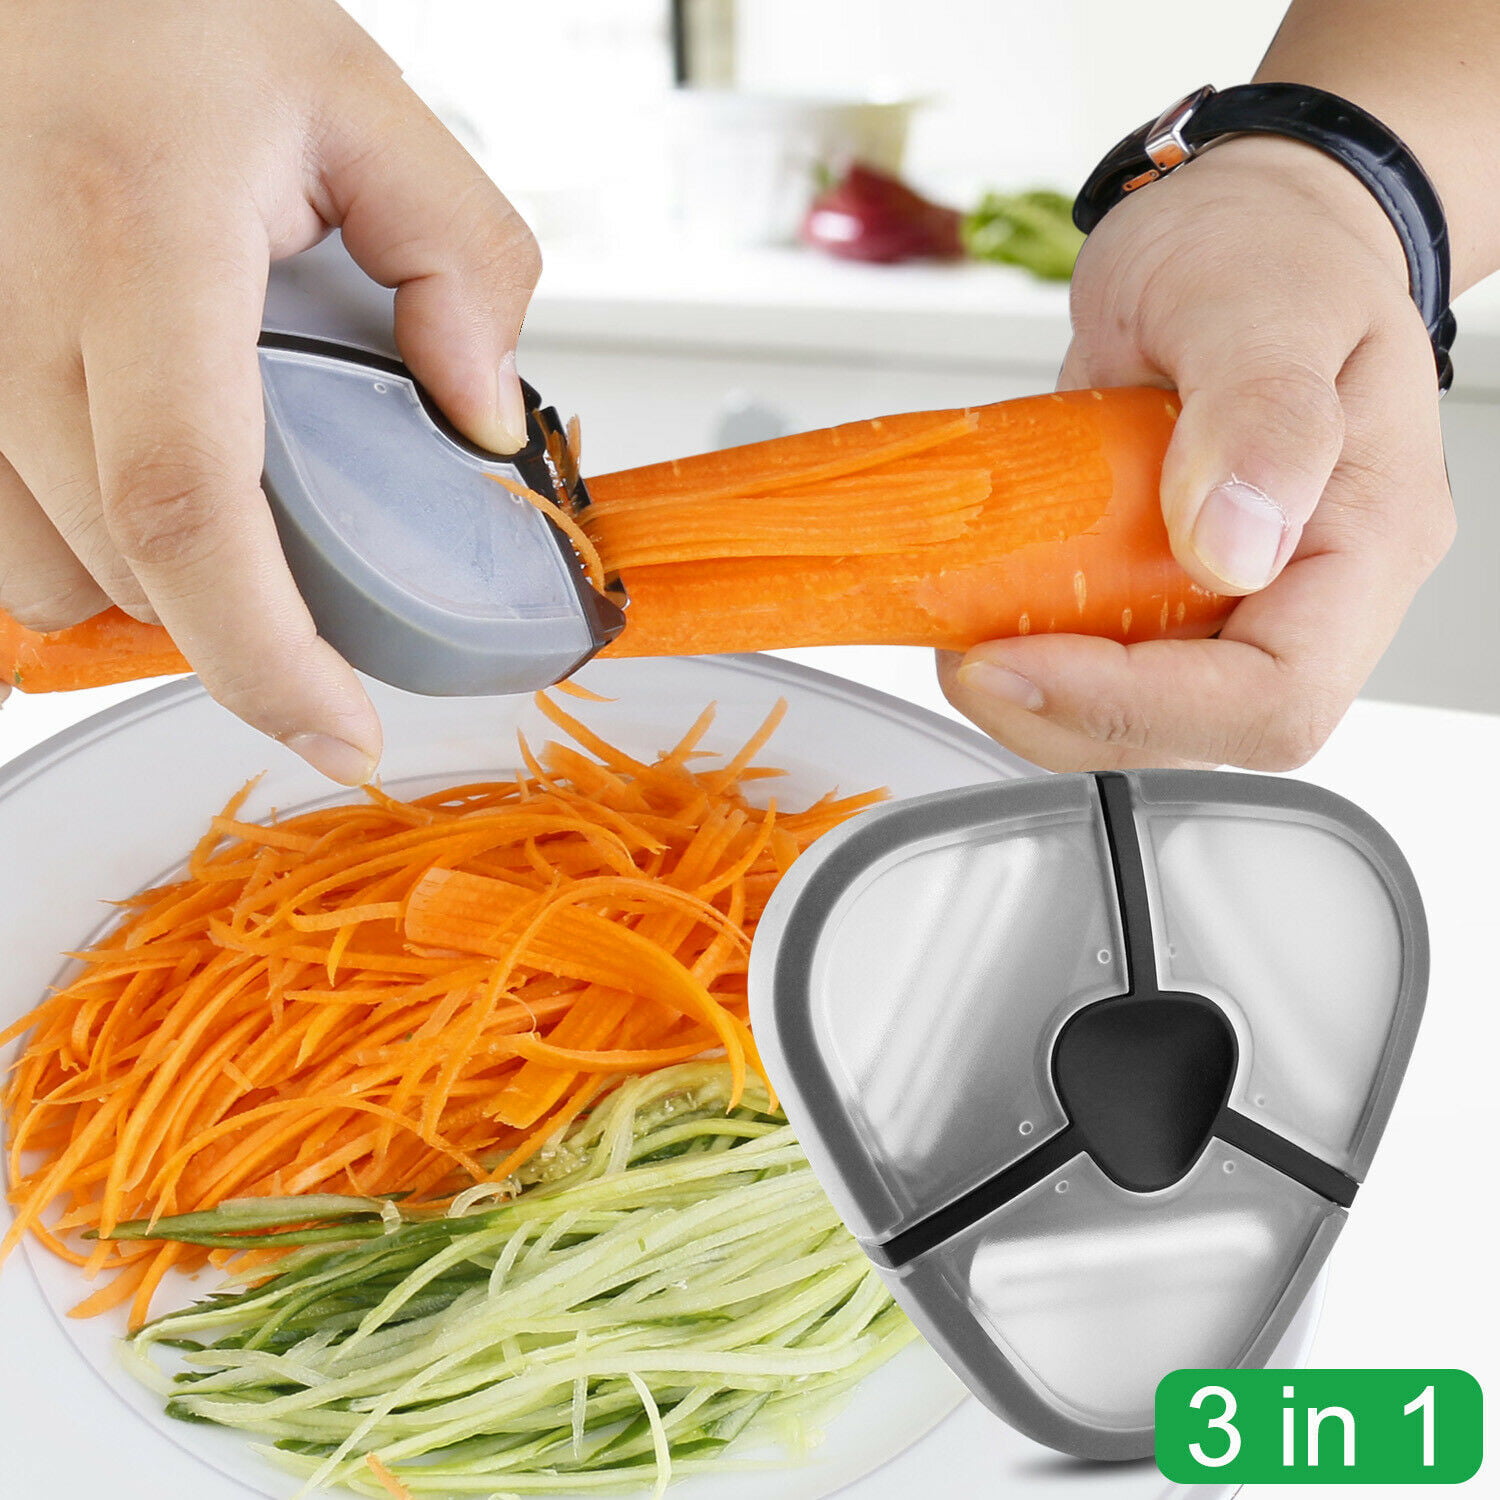 Stainless Steel Potato Peeler Carrot Grater Fruit Serrated Vegetable Cutter Tool